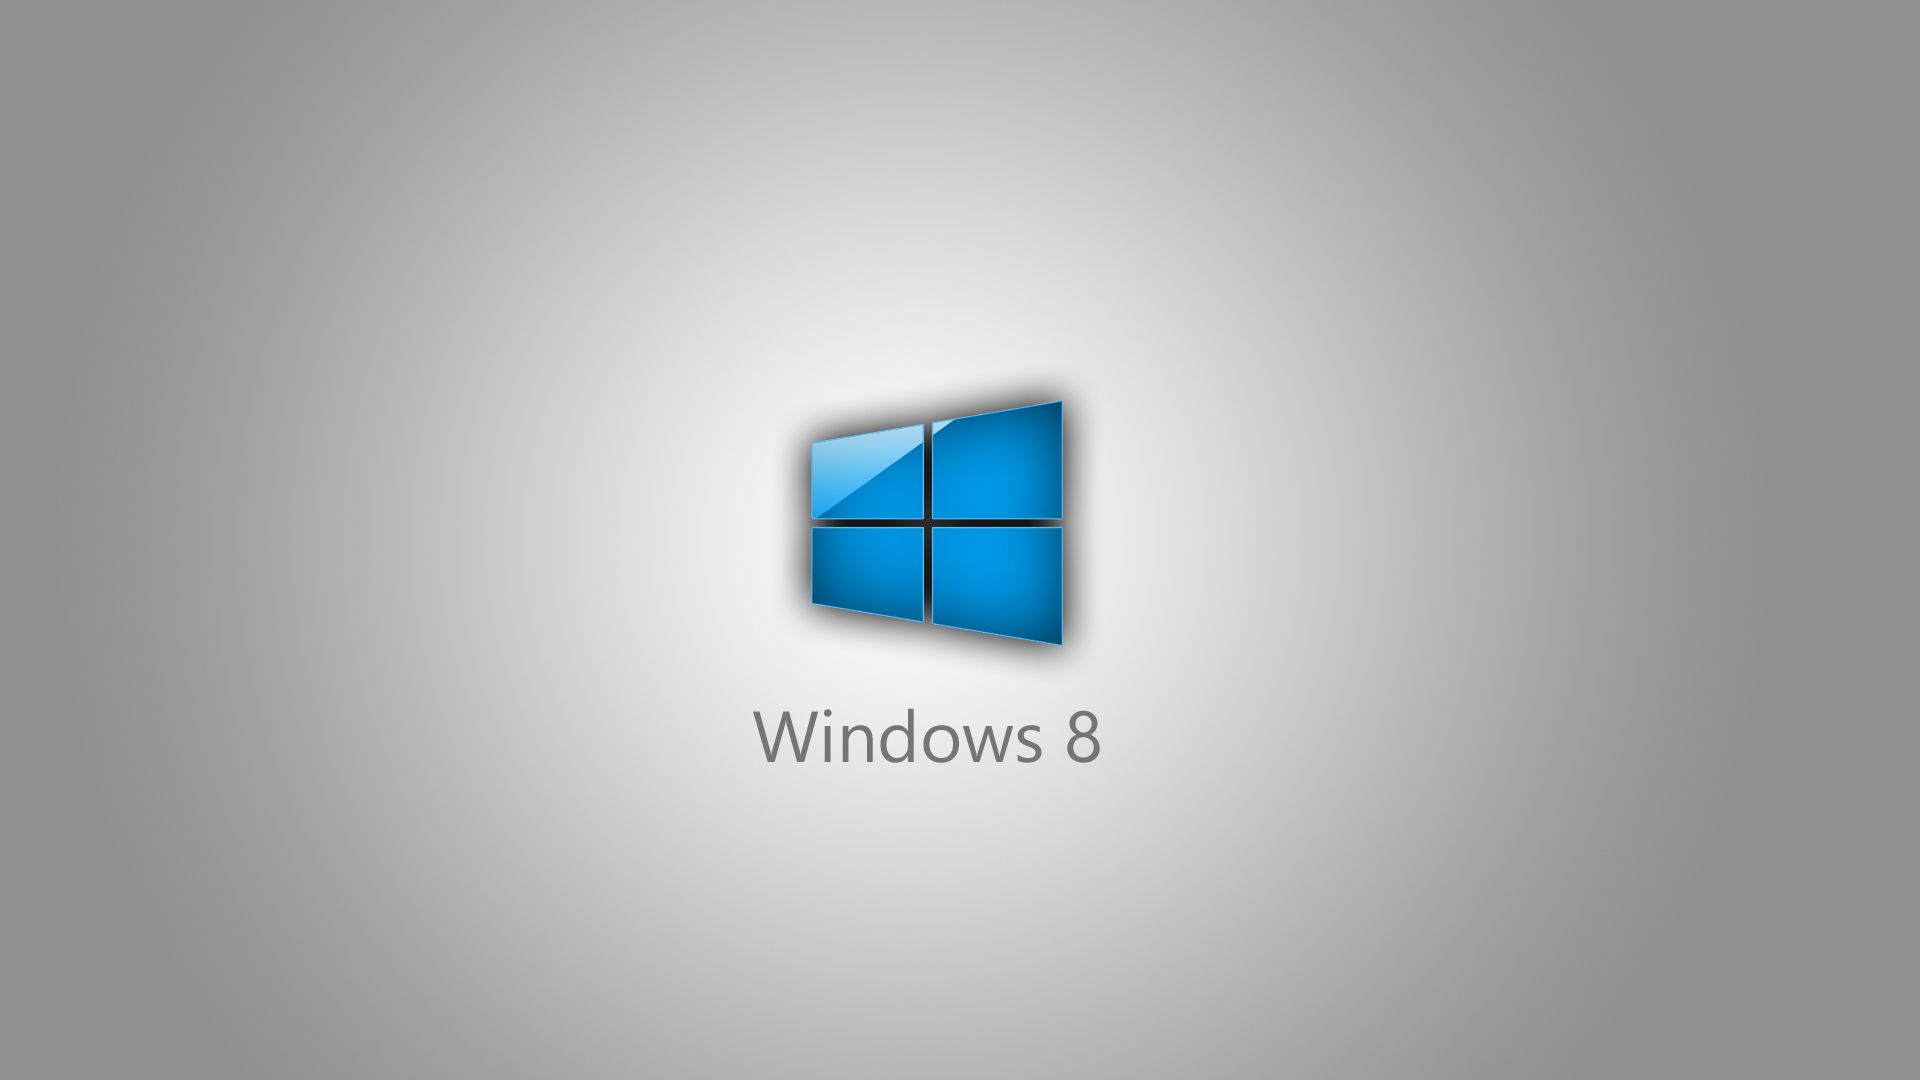 windows 8 wallpaper hd 1080p free download #8